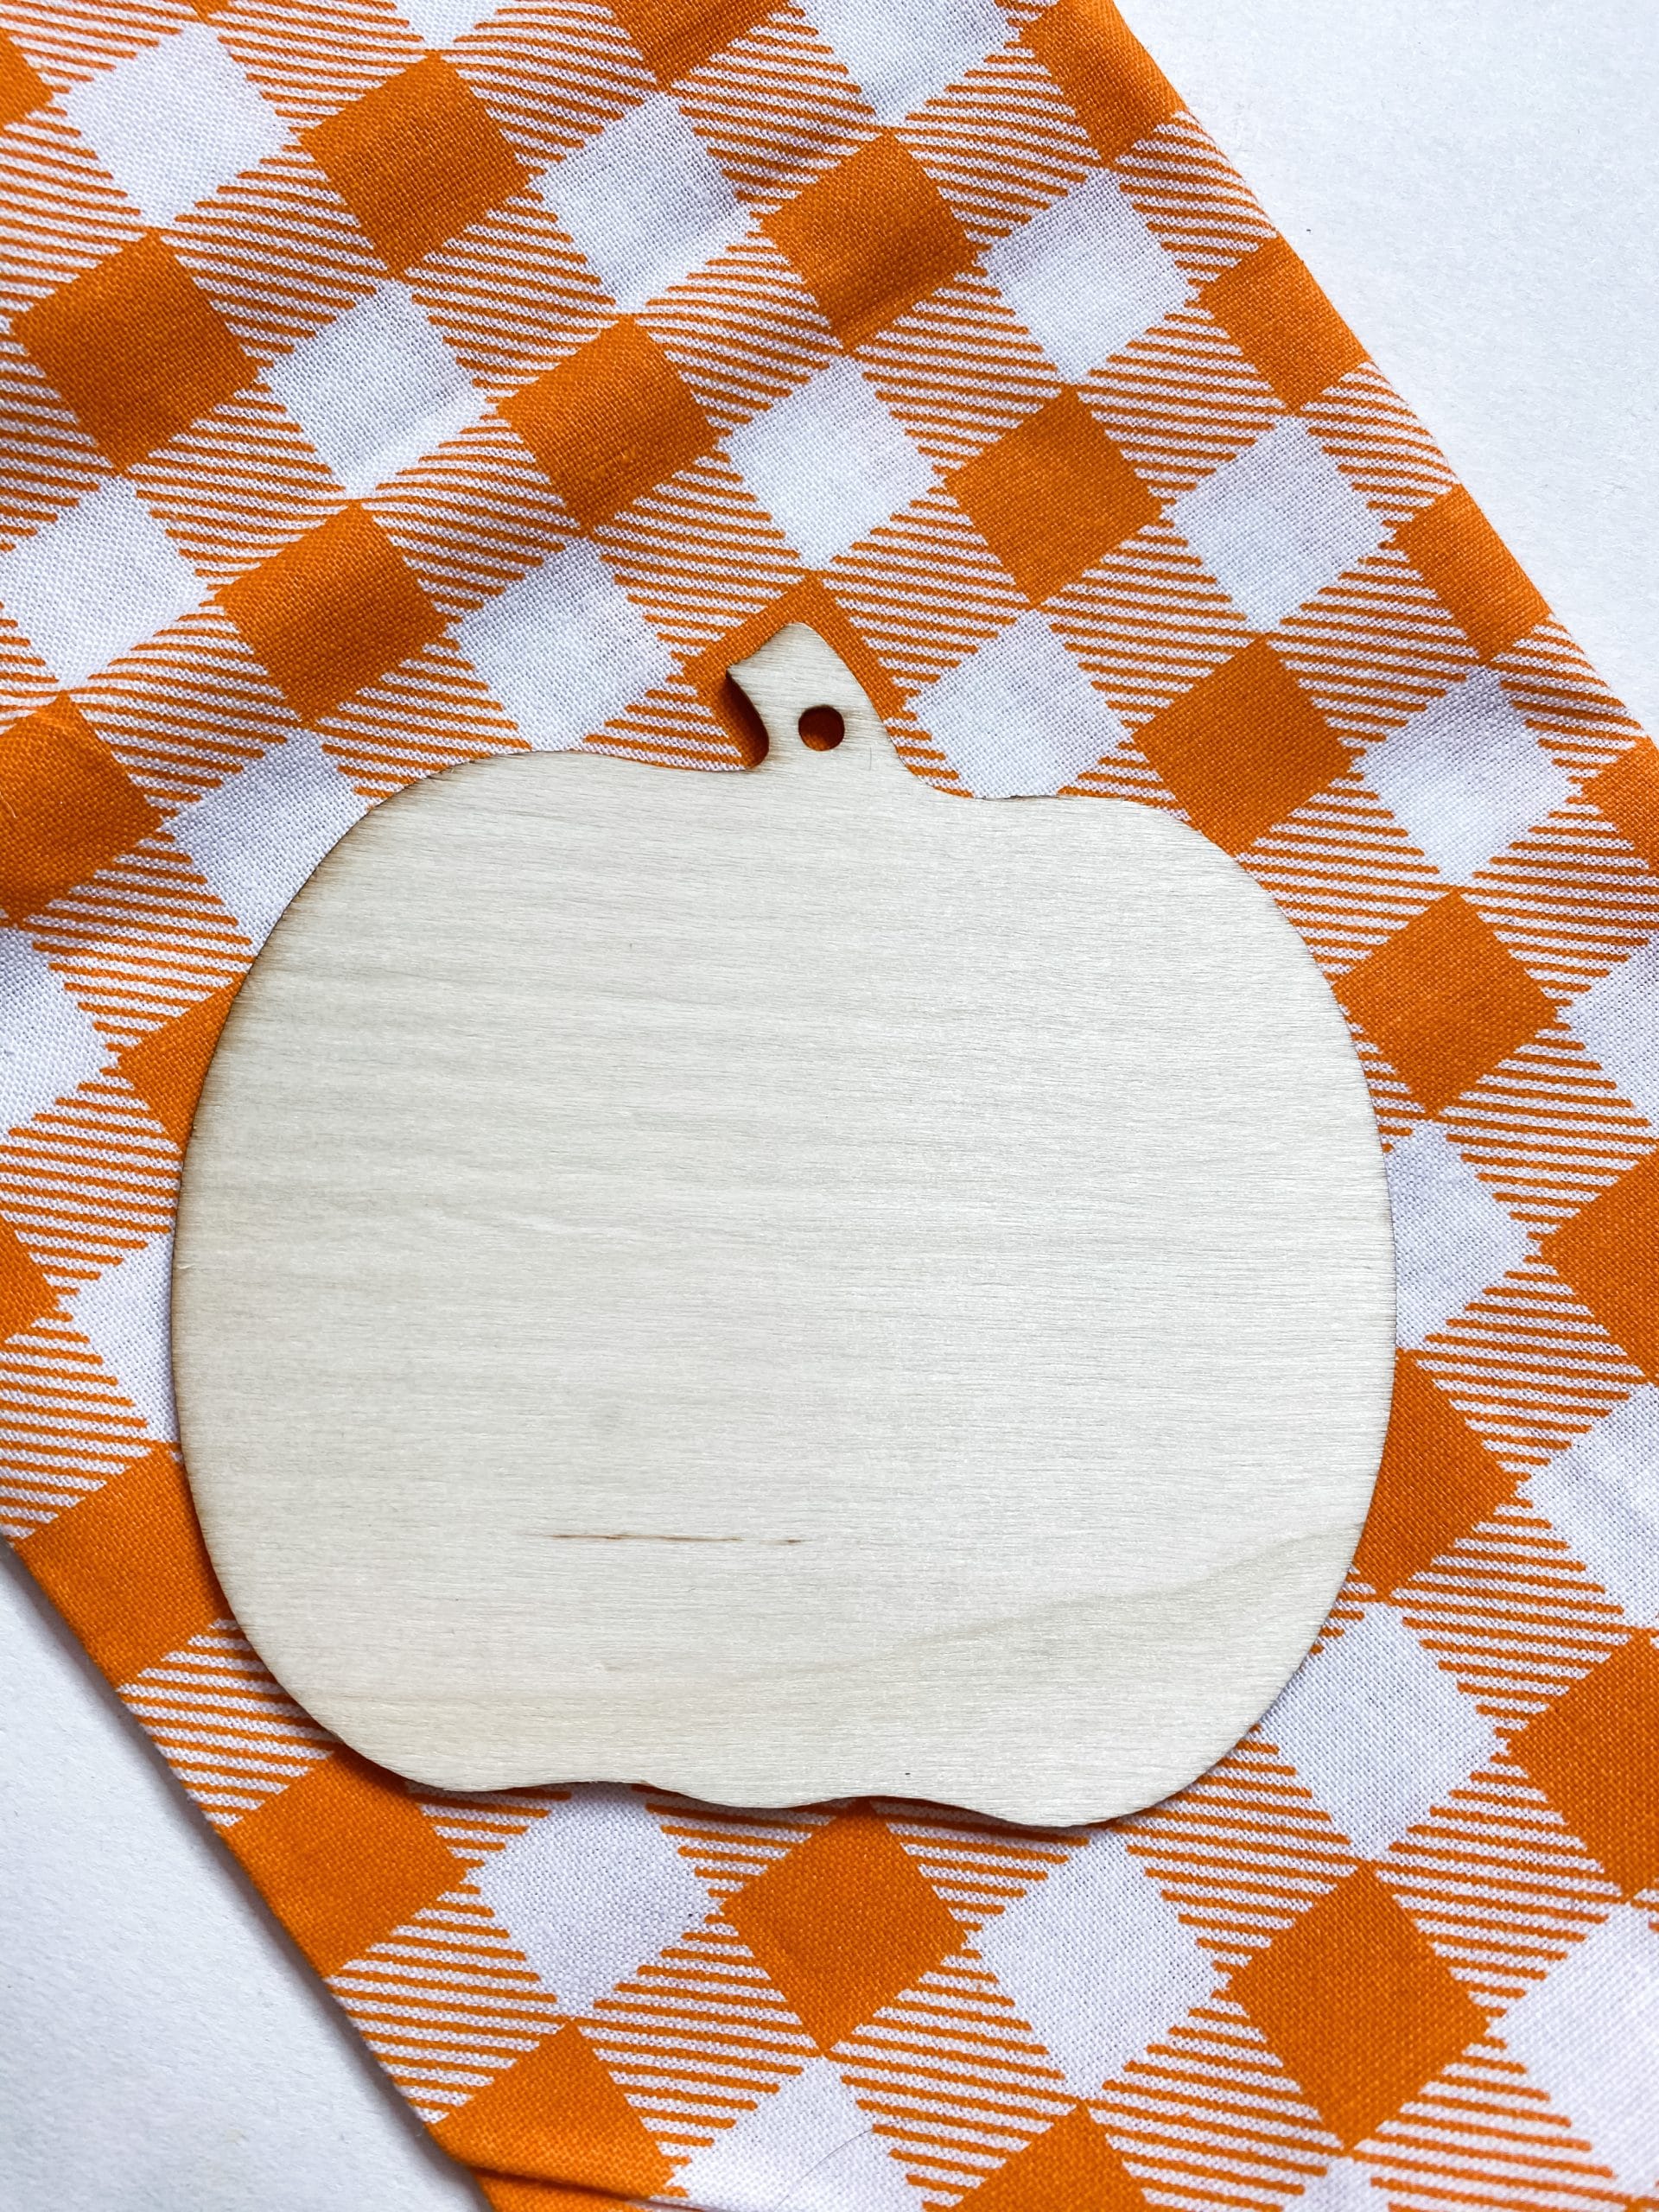 How to Make a Dollar Tree Mini Pumpkin DIY Fall Decor